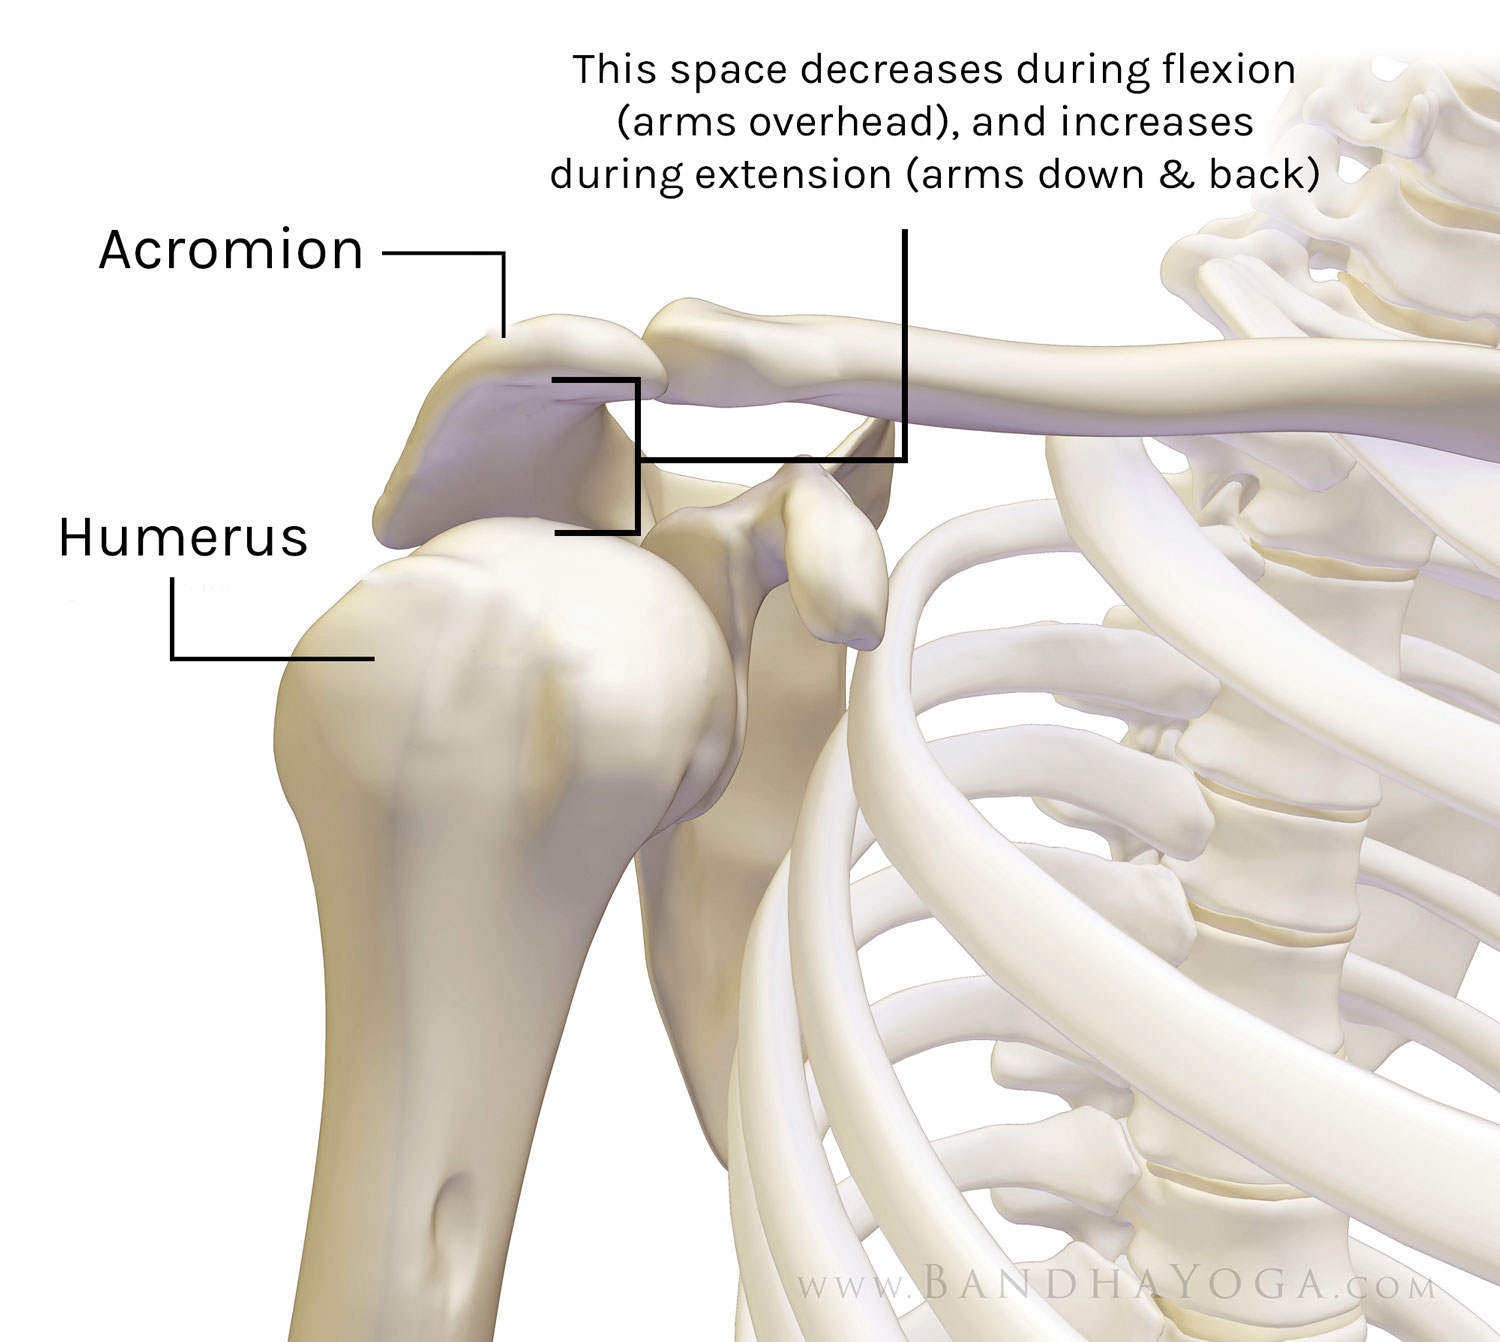 shoulder flexion vs extension